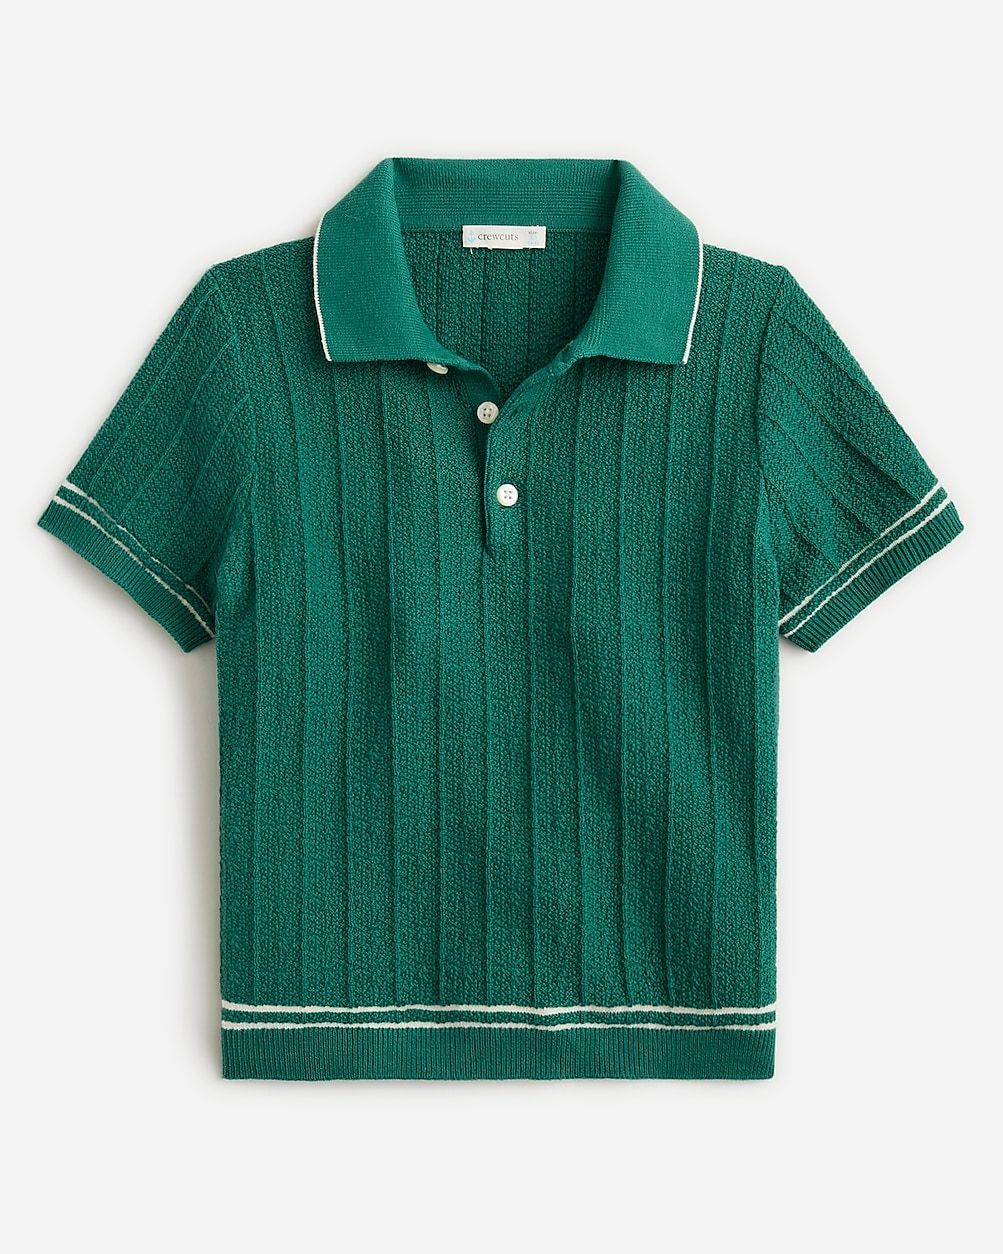 Boys' texture-stitch cotton-tipped sweater polo | J.Crew US